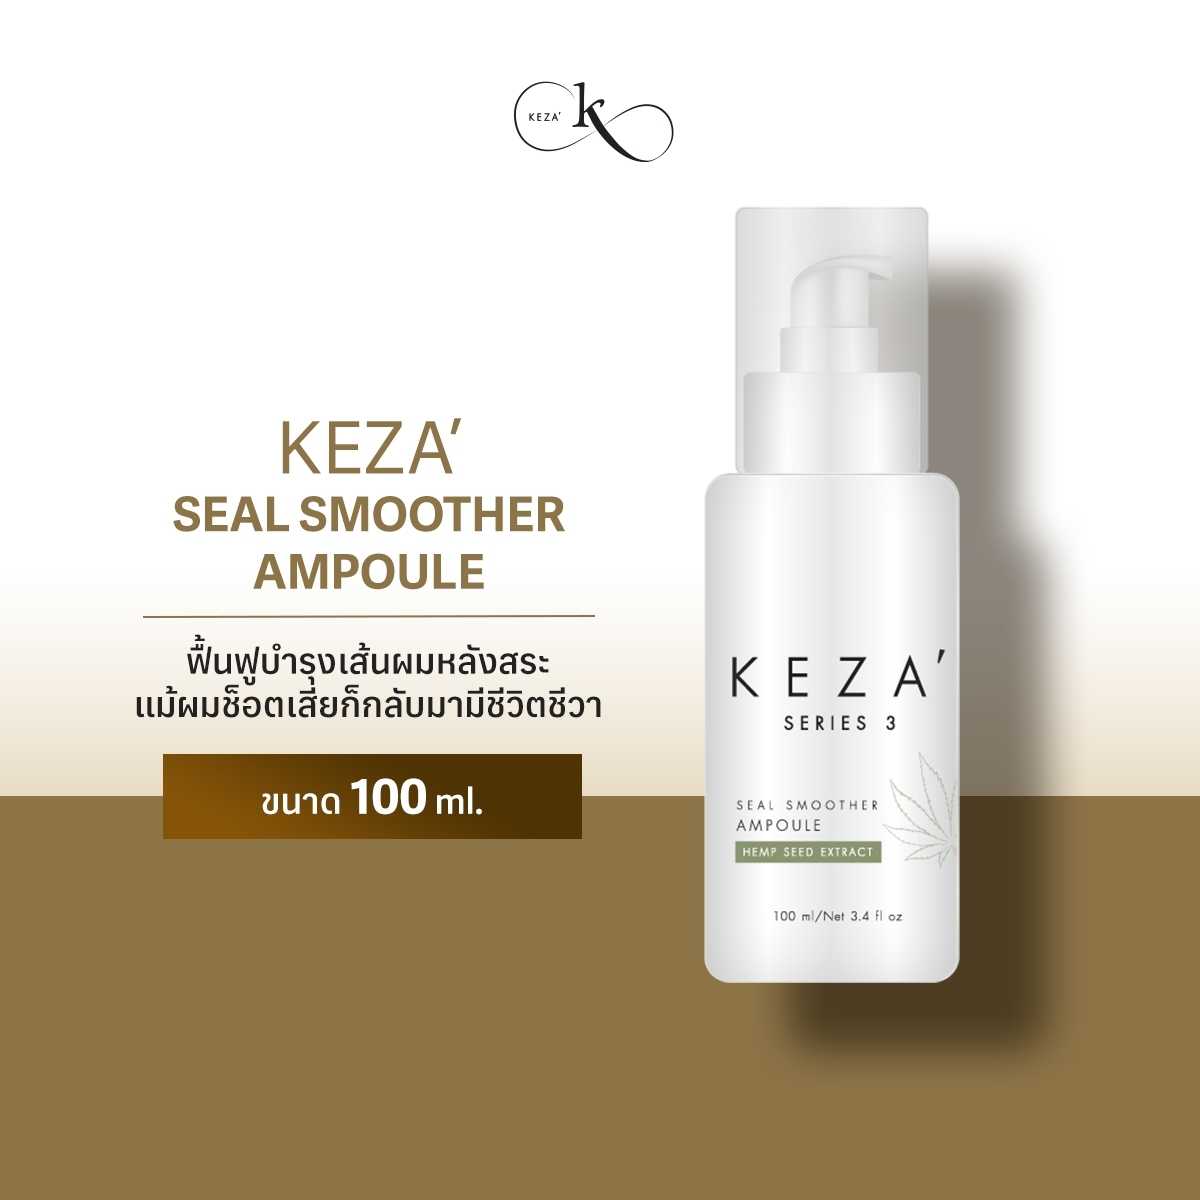 KEZA' Seal Smoother Ampoule / เคซ่า ซีลสมูทเทอร์แอมเพิล